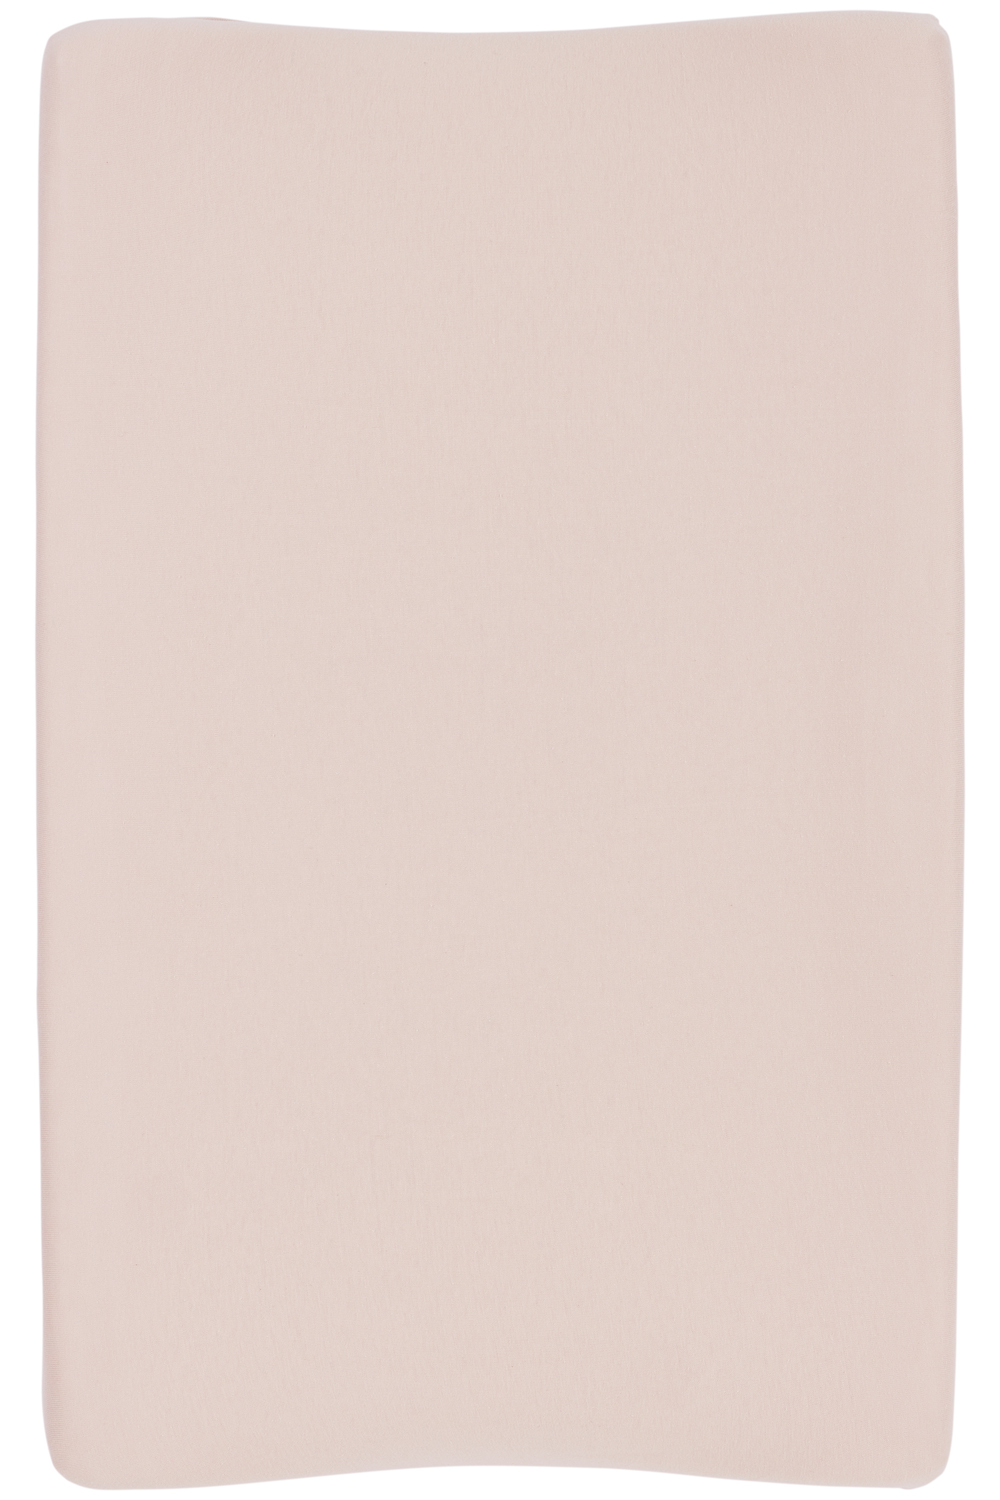 Aankleedkussenhoes 2-pack Uni - soft pink - 50x70cm